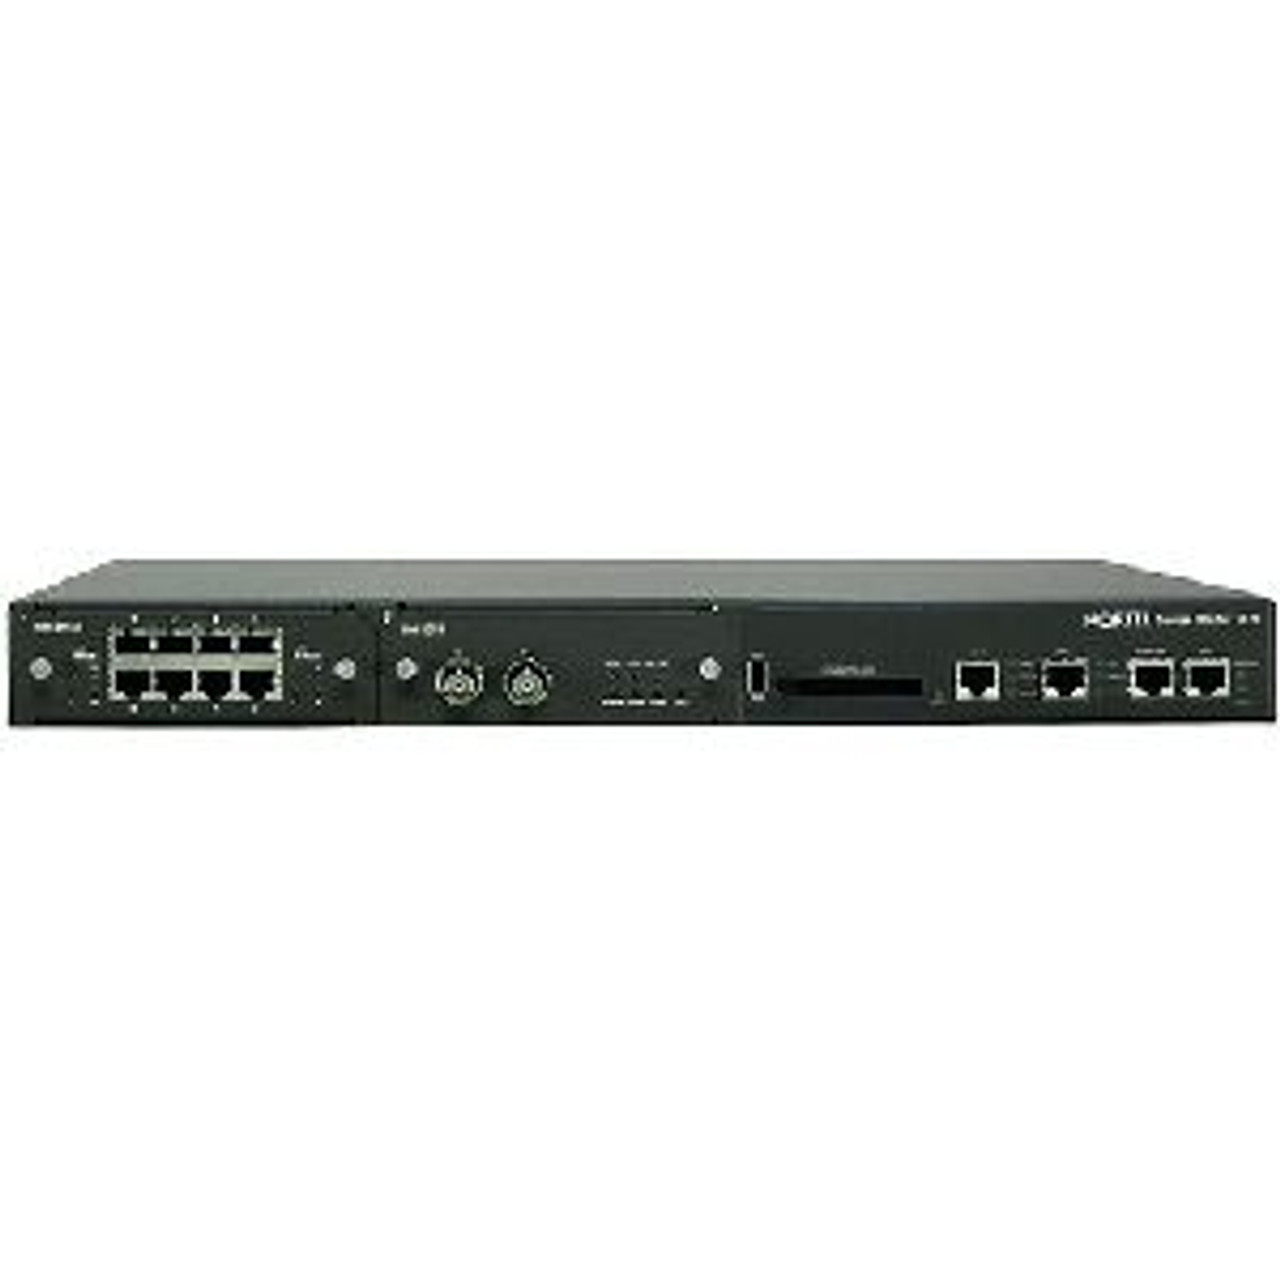 SR2102001 Nortel 3120 Secure Router 1 x CompactFlash (CF) Card 2 x 10/100Base-TX LAN, 1 x USB (Refurbished)